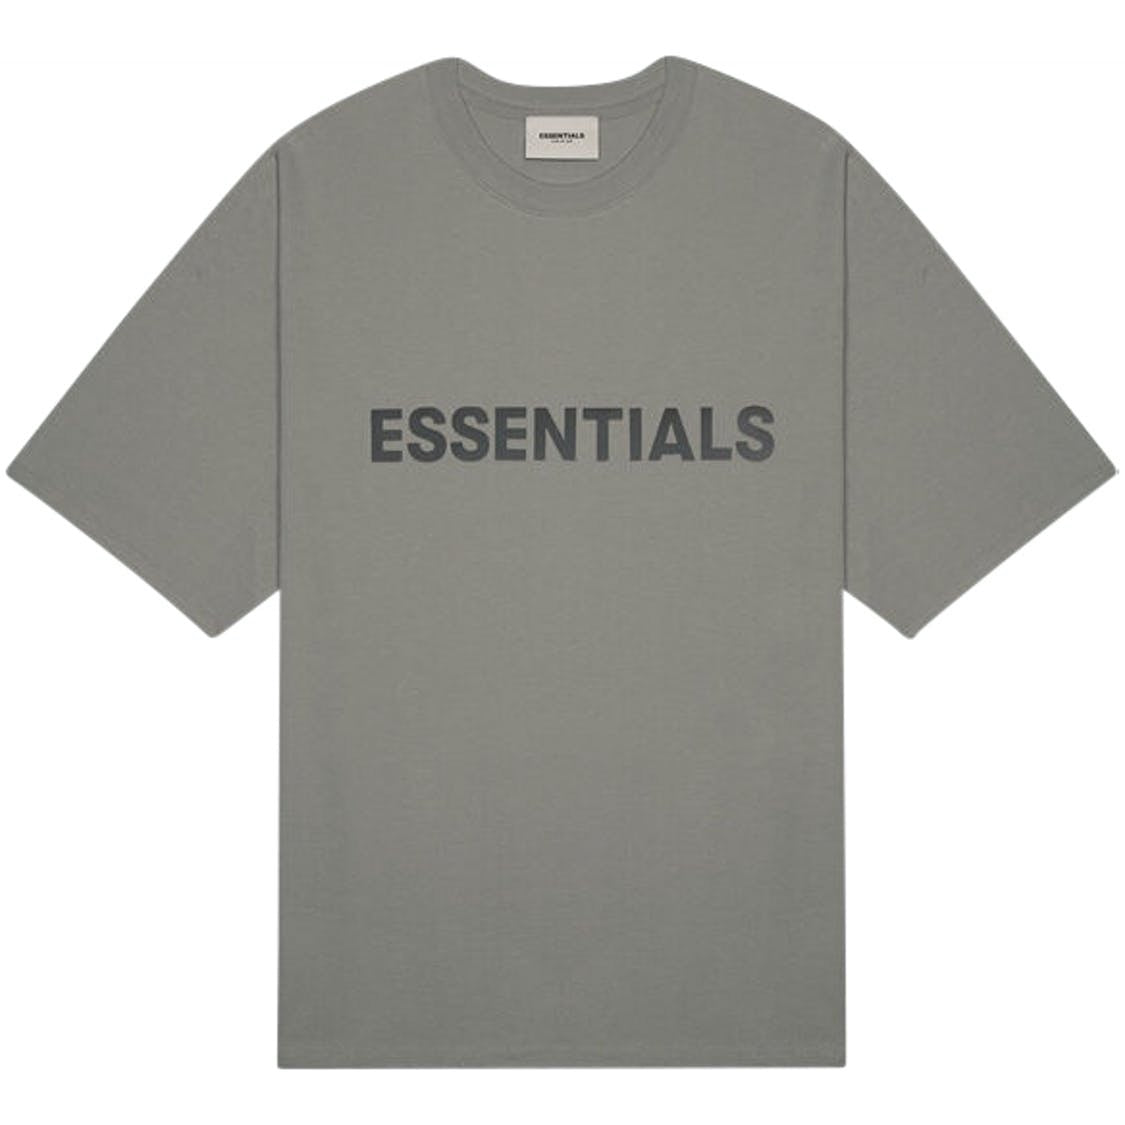 FOG Essentials - Charcoal Grey 3D logo tee - Centrall Online